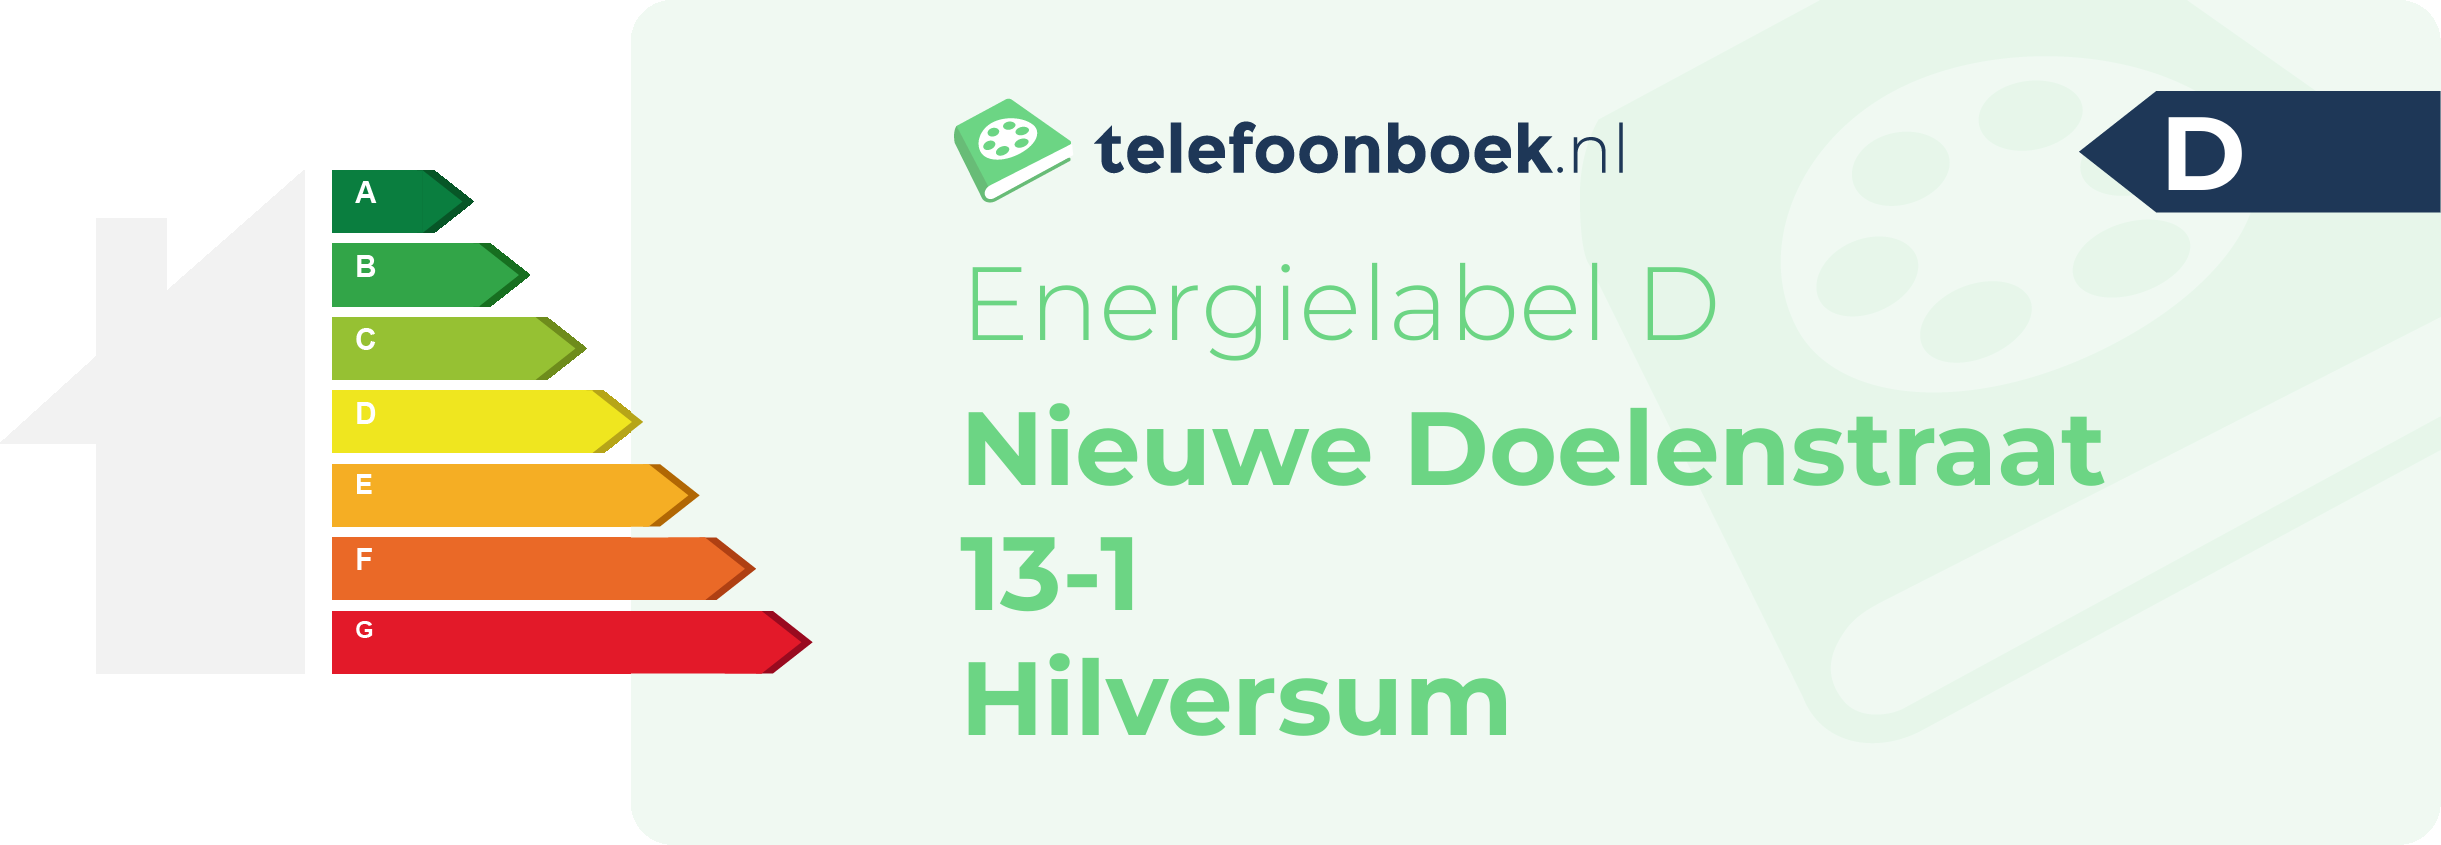 Energielabel Nieuwe Doelenstraat 13-1 Hilversum